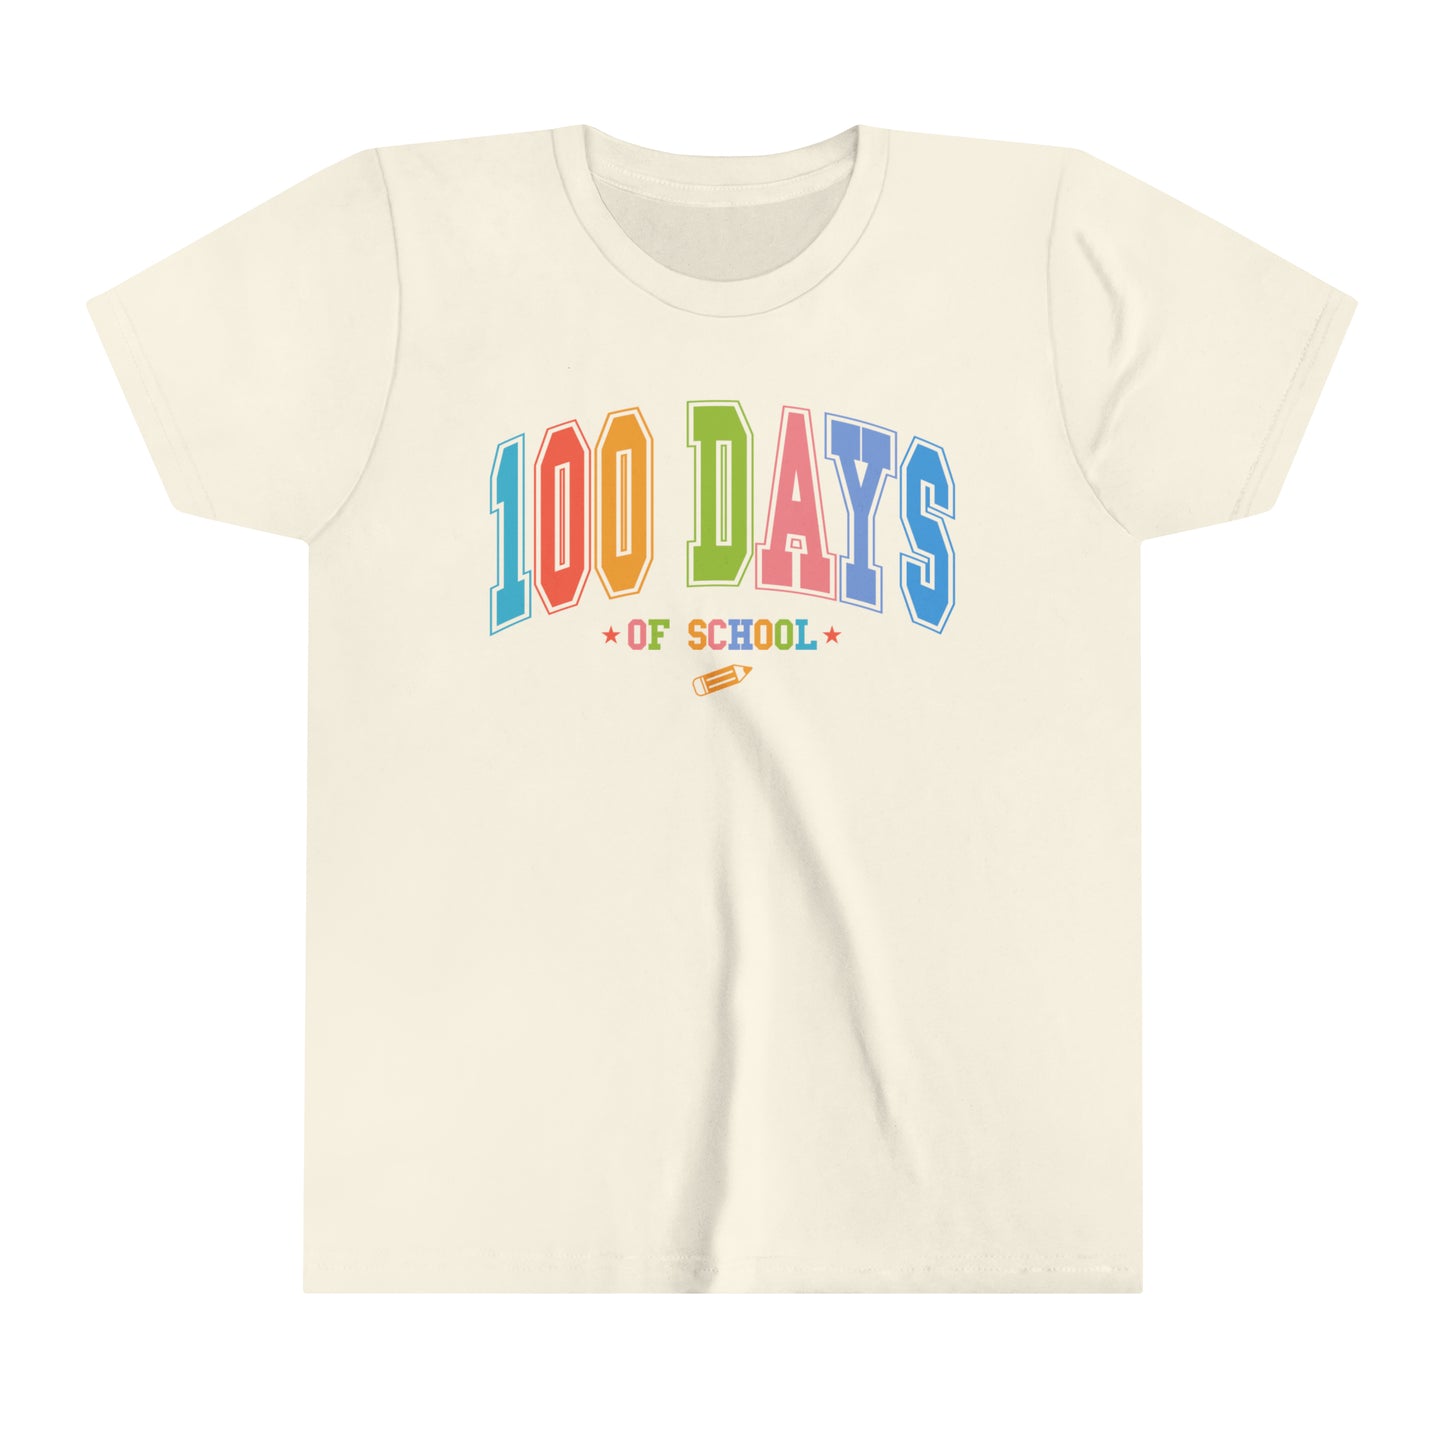 100 Days of School Girl's Youth Short Sleeve Tee